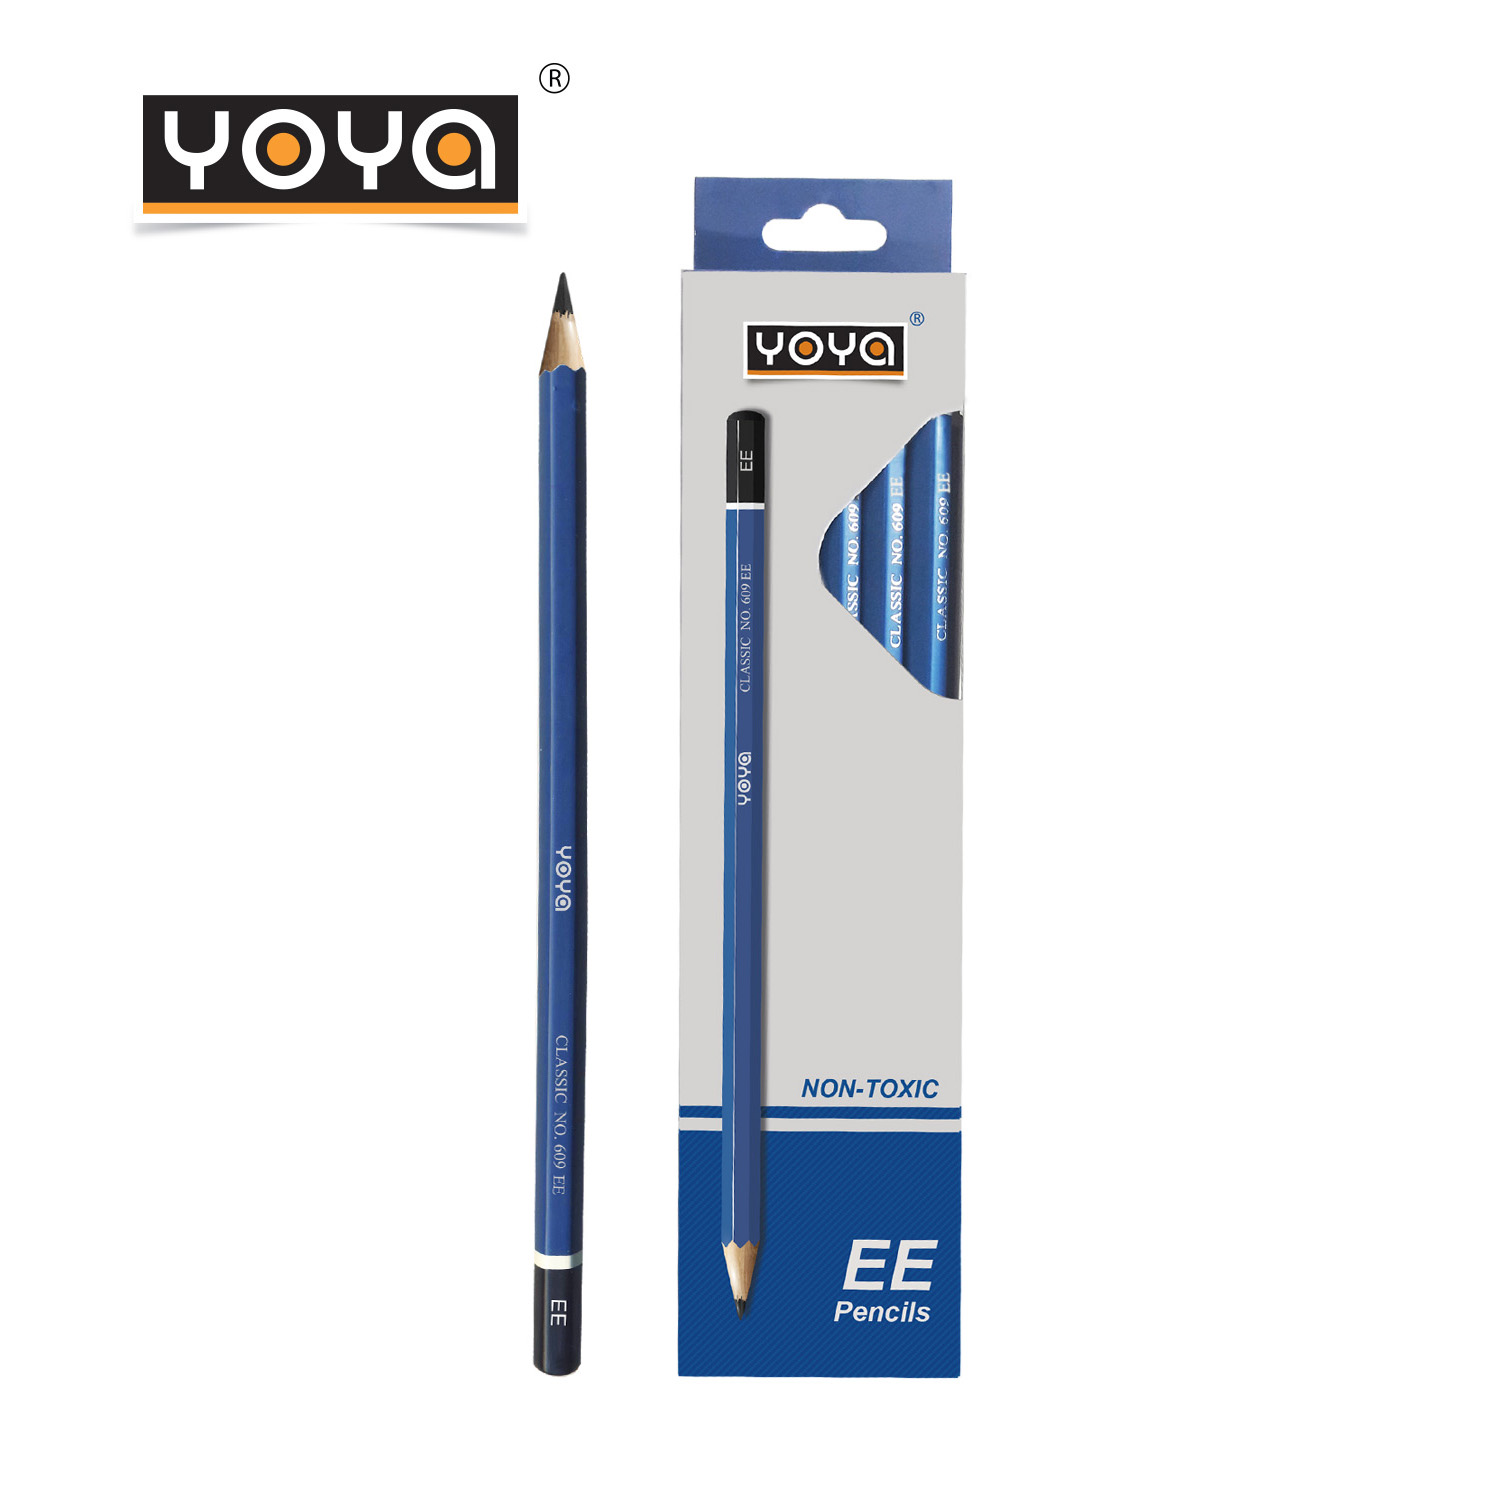 YOYA ดินสอไม้-EE แพ็ค 12 รุ่น 609-EE